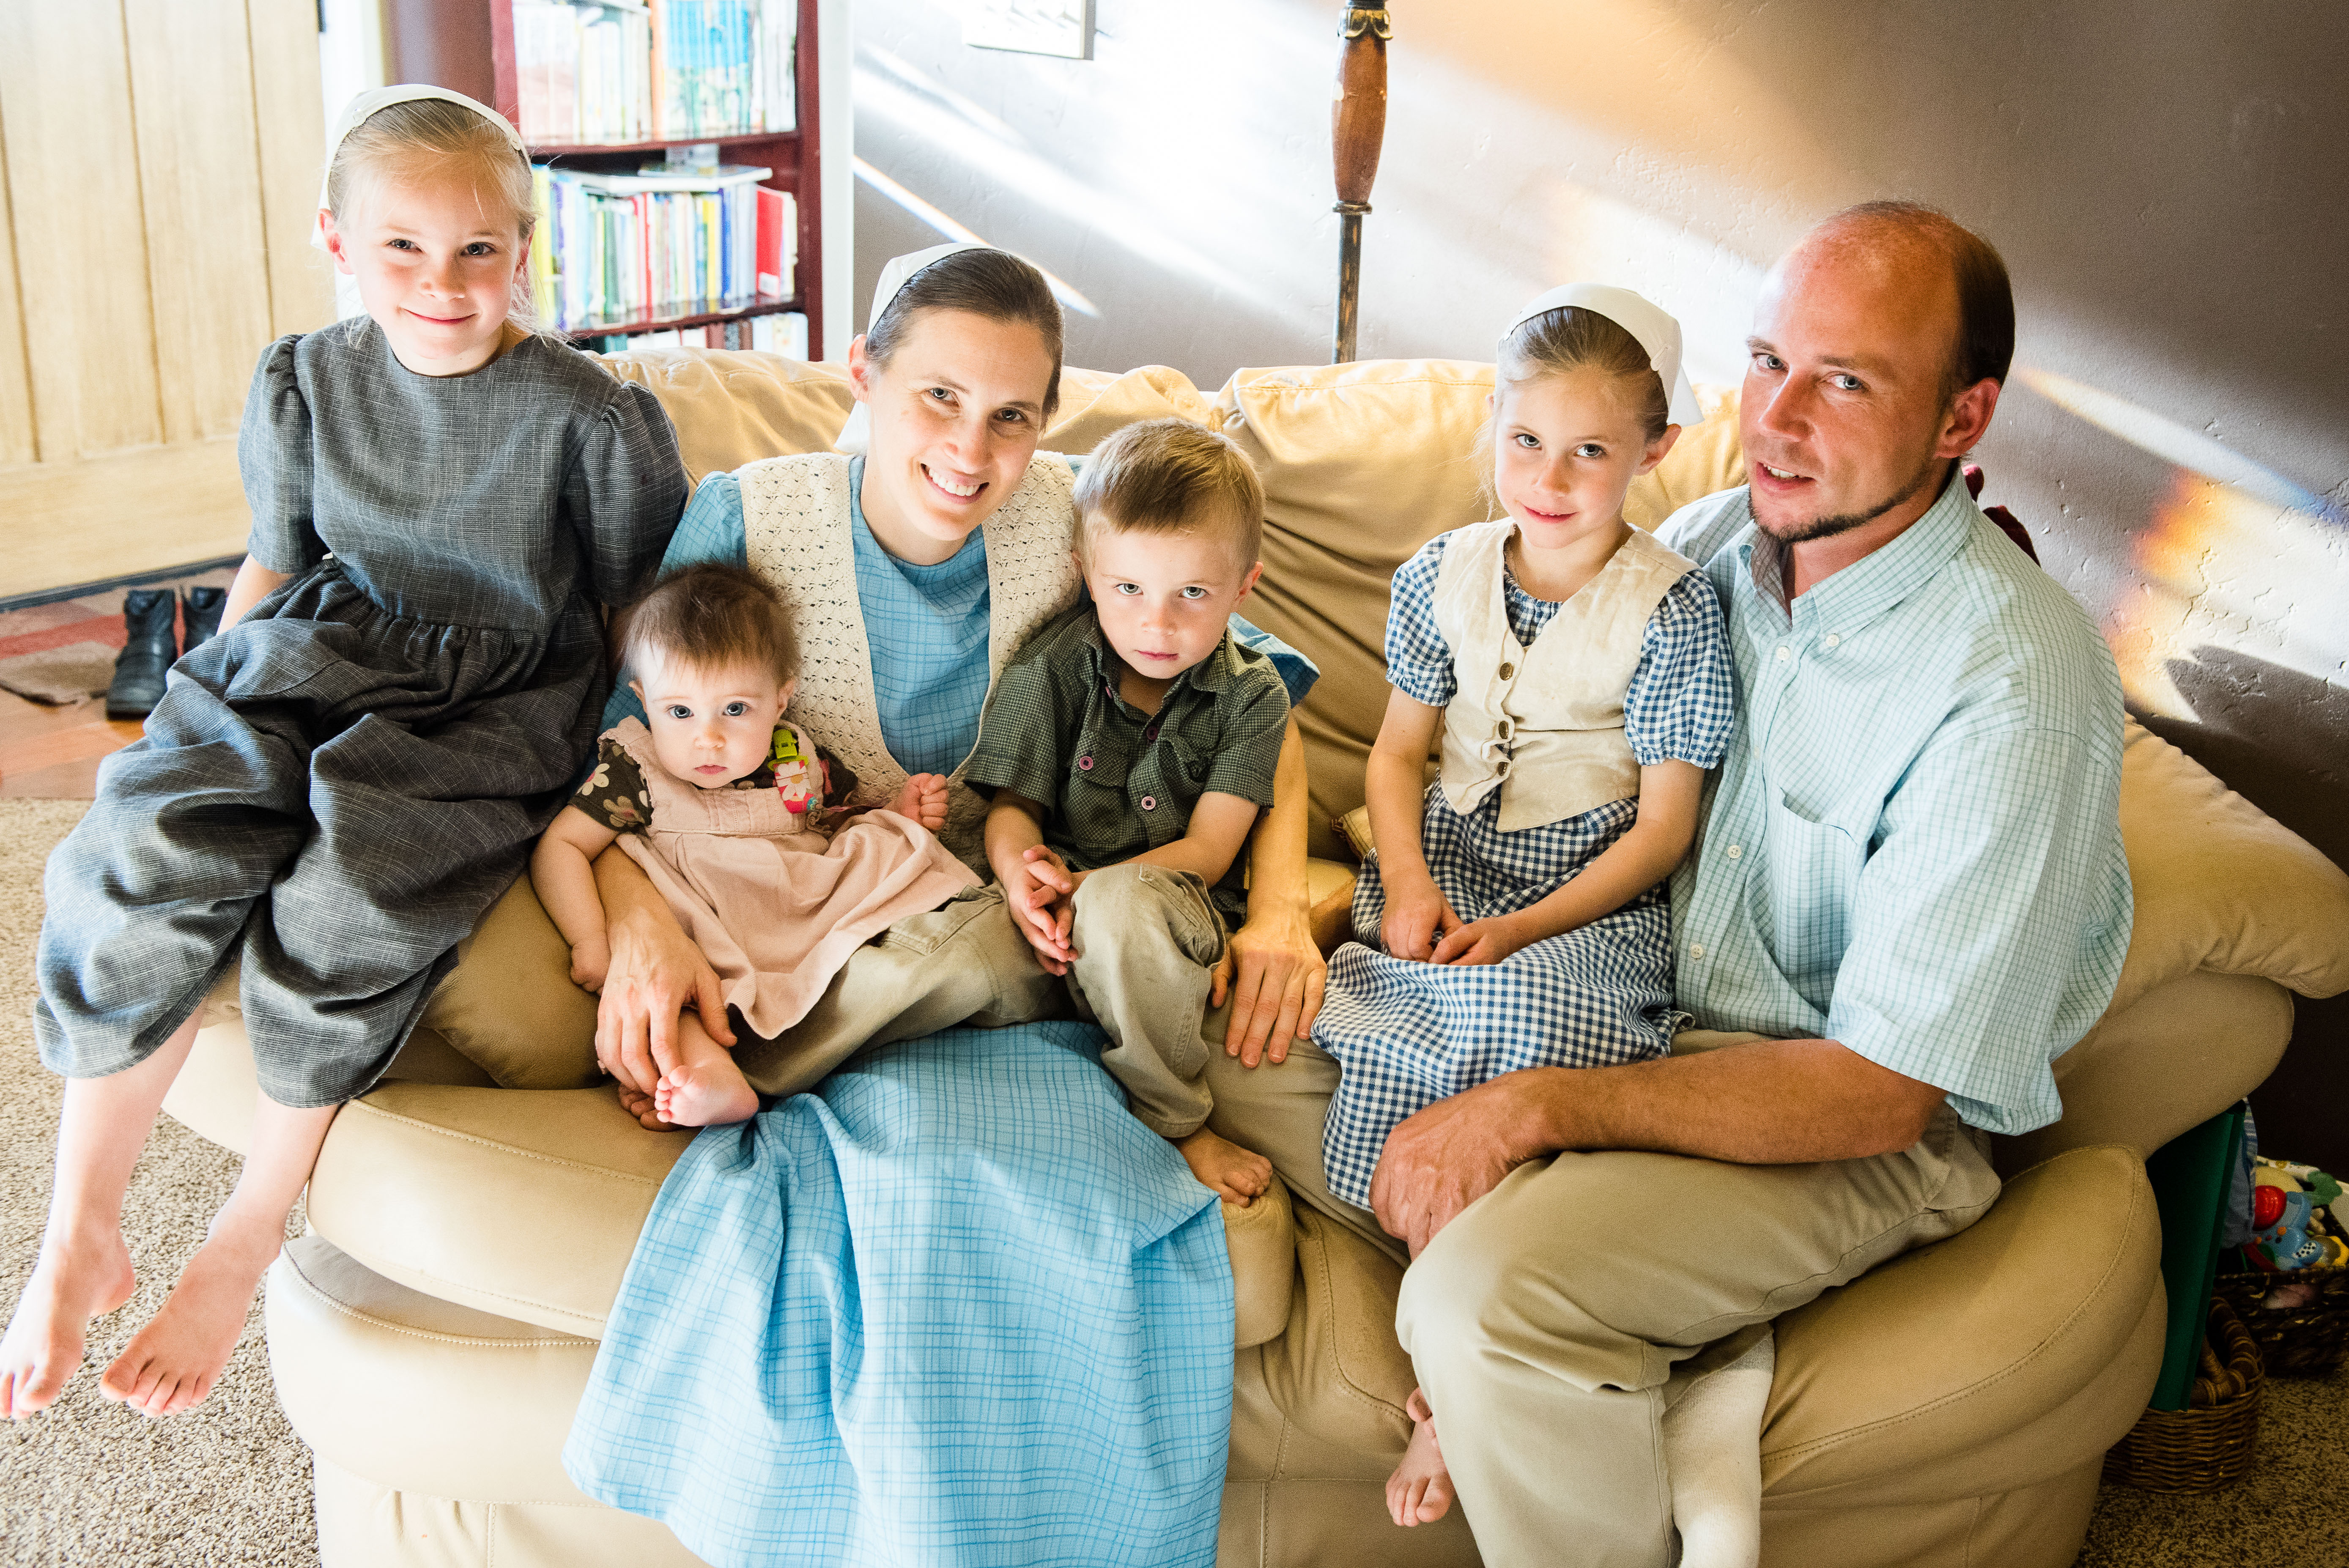 Utah Valley Mennonites find joy in worship The Daily Universe